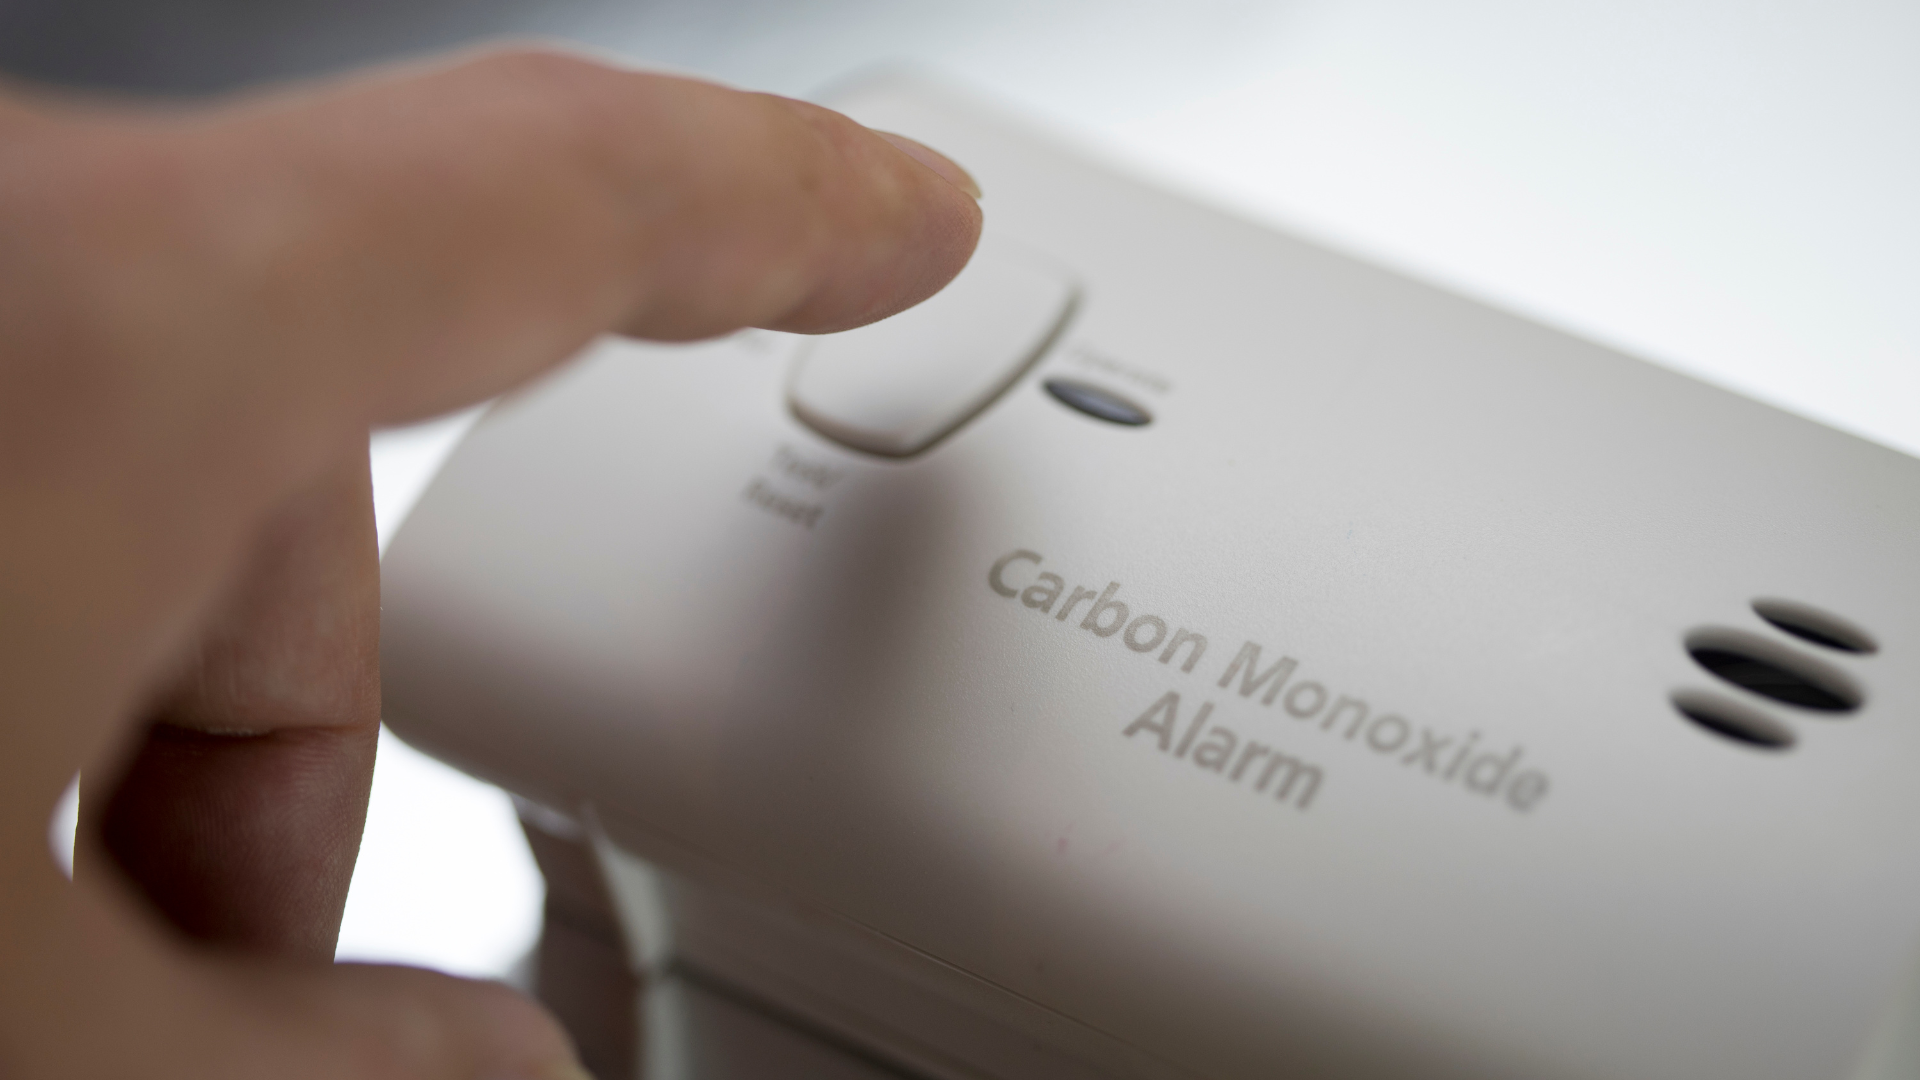 a carbon monoxide alarm, a church in monroe had an incident...